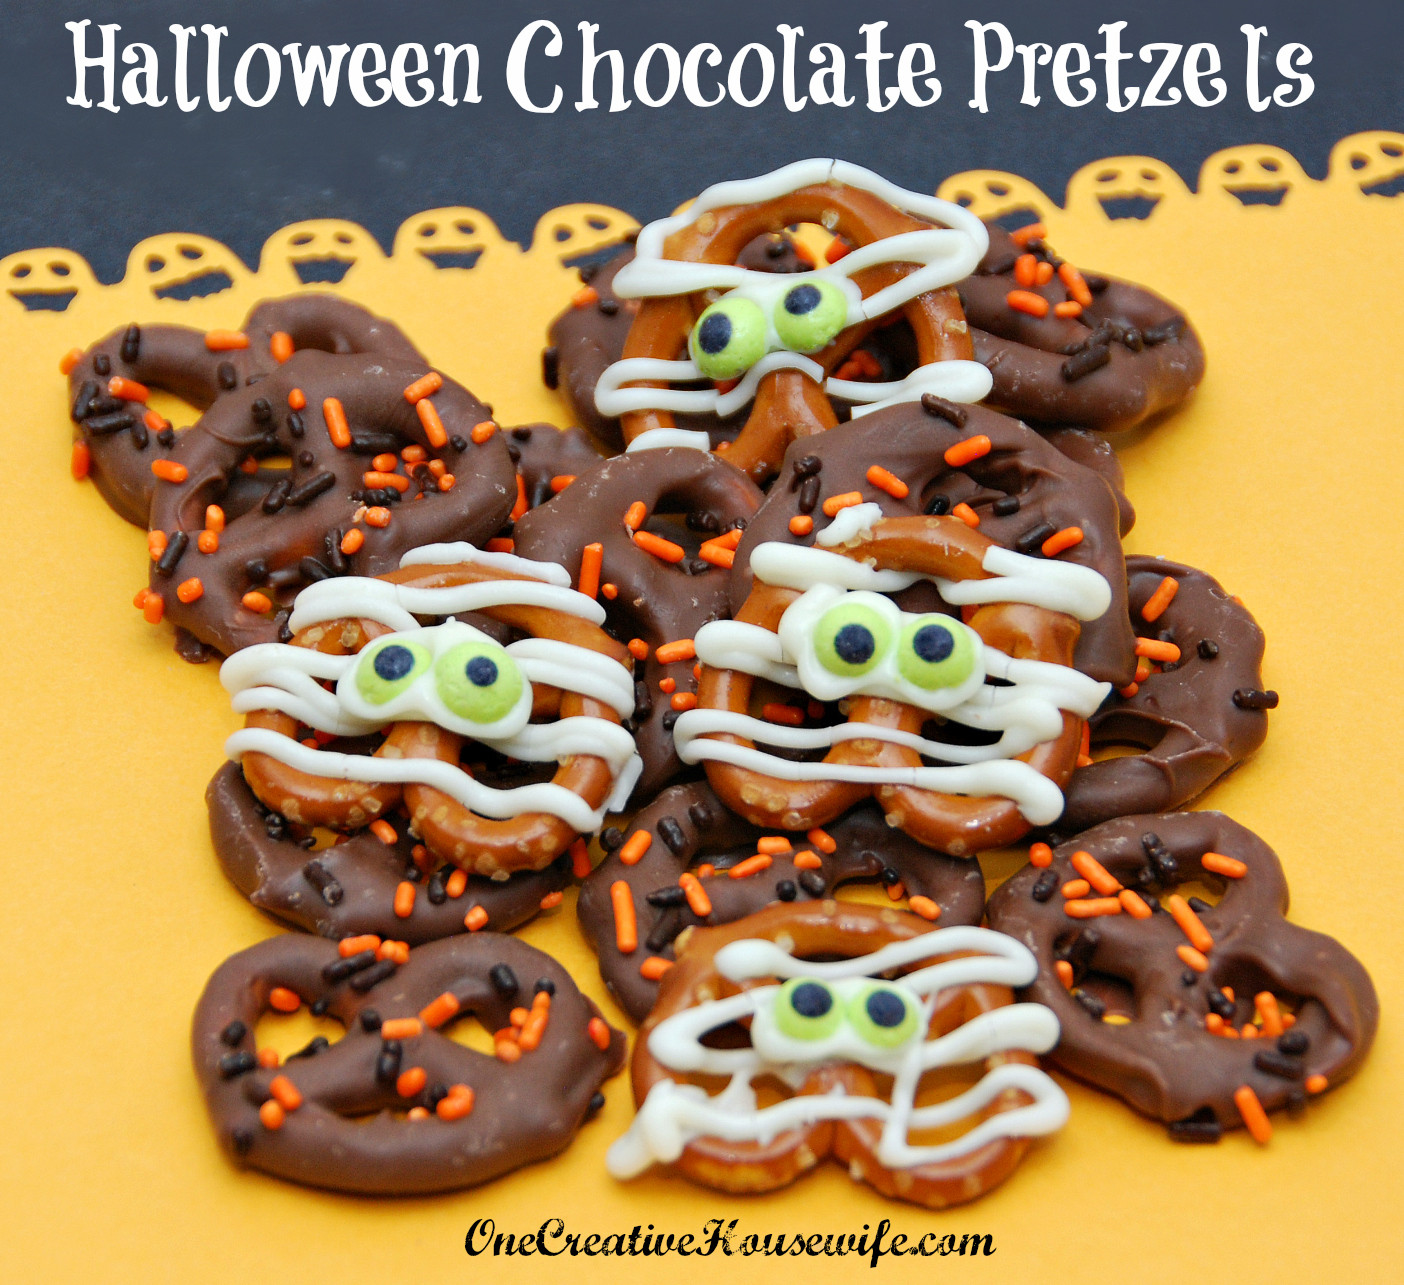 Halloween Chocolate Covered Pretzels
 e Creative Housewife Halloween Chocolate Covered Pretzels